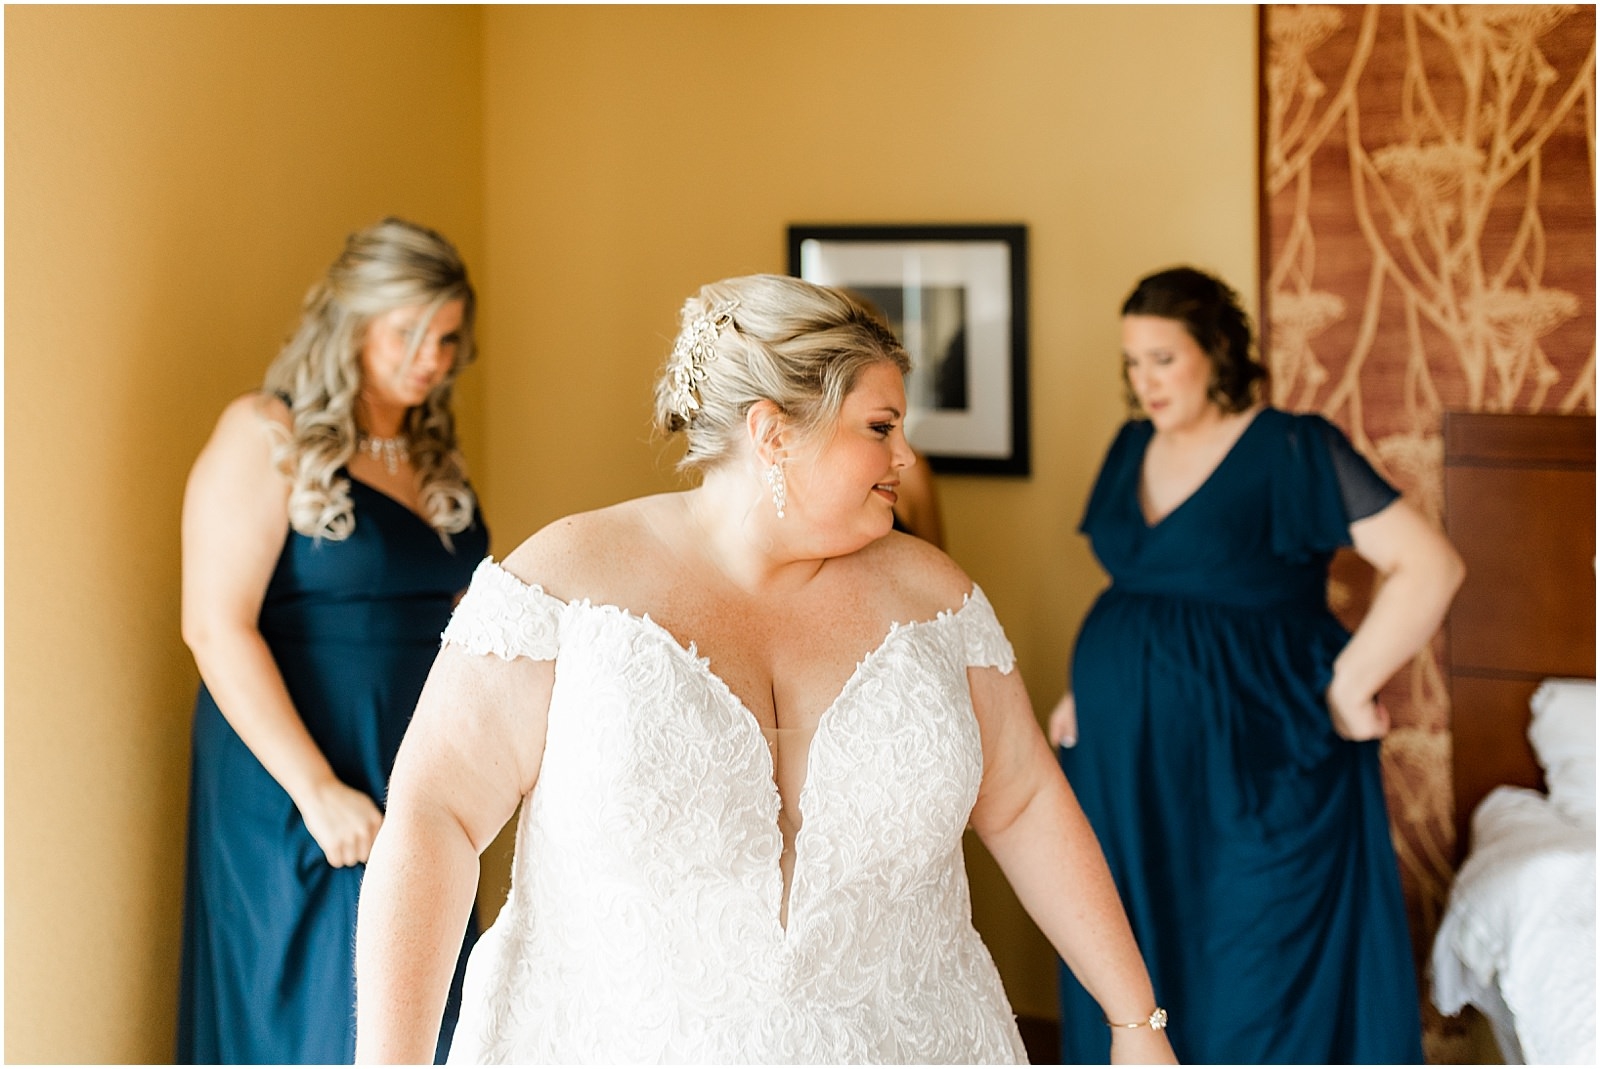 Brittany and Neil's Wedding at Neu Chapel Bret and Brandie | Evansville Photographers | @bretandbrandie-0020.jpg